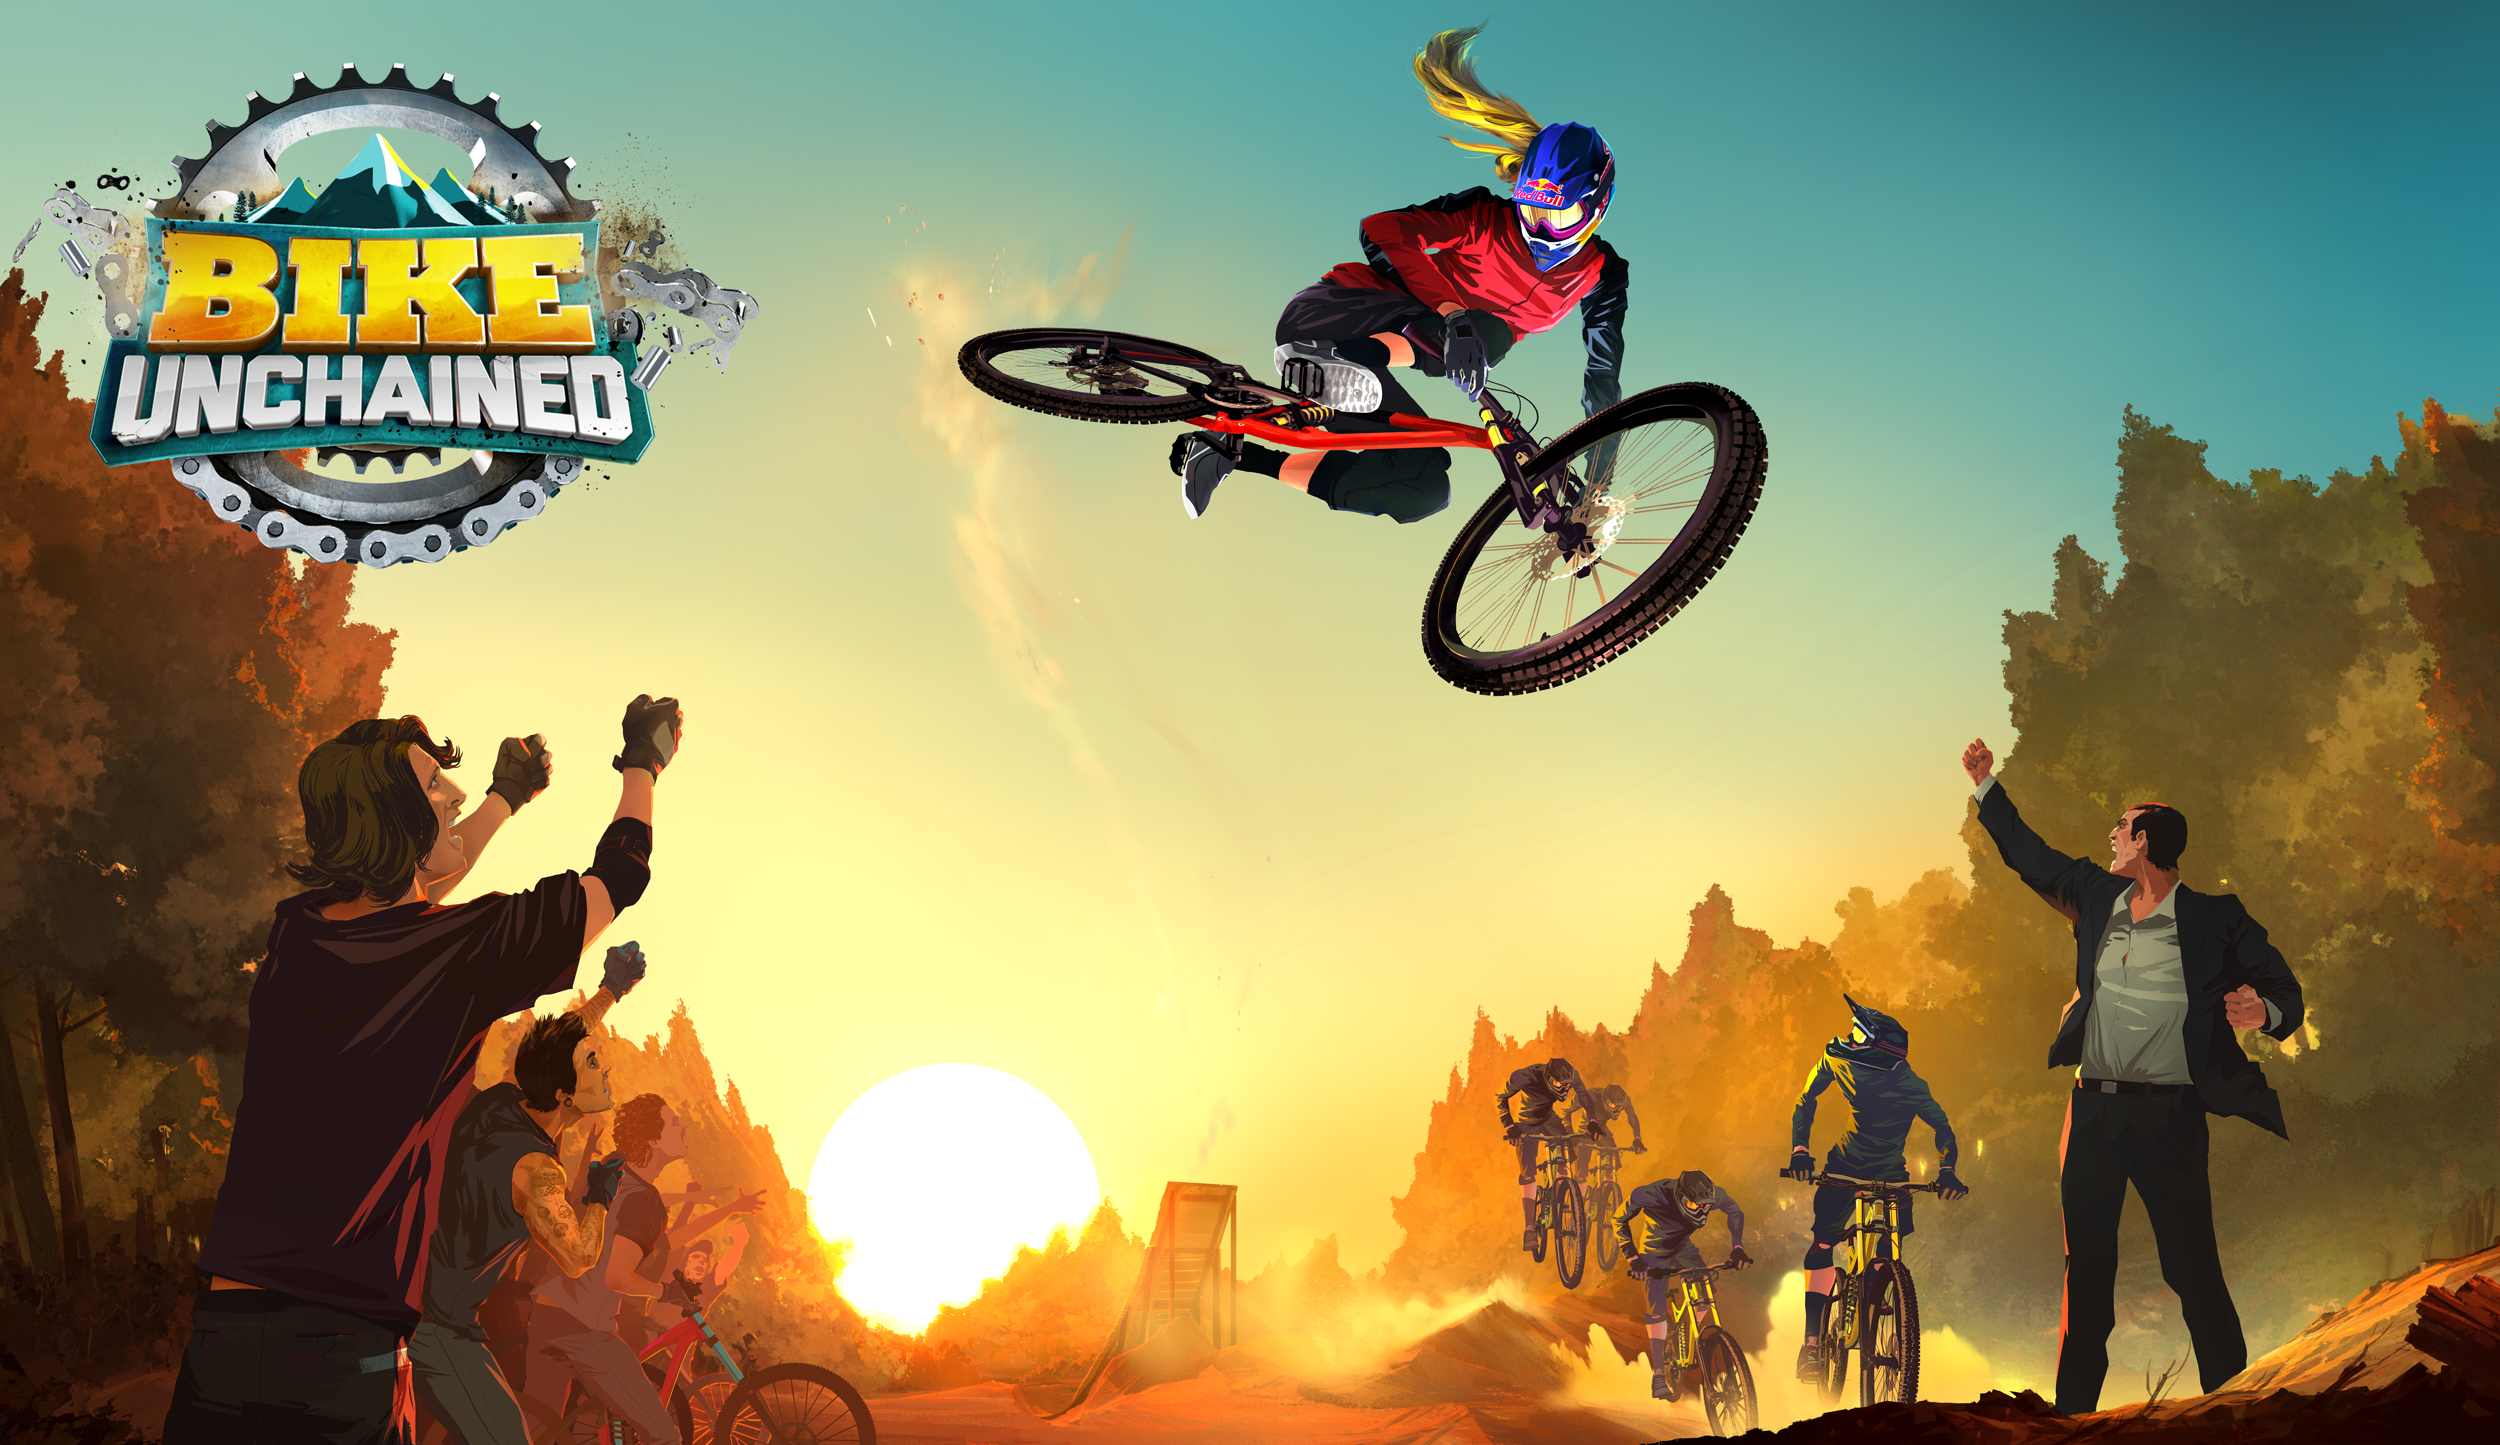 Red Bull's Unchained Brings New Dimensions Mountain Bike Video Games - Bikerumor